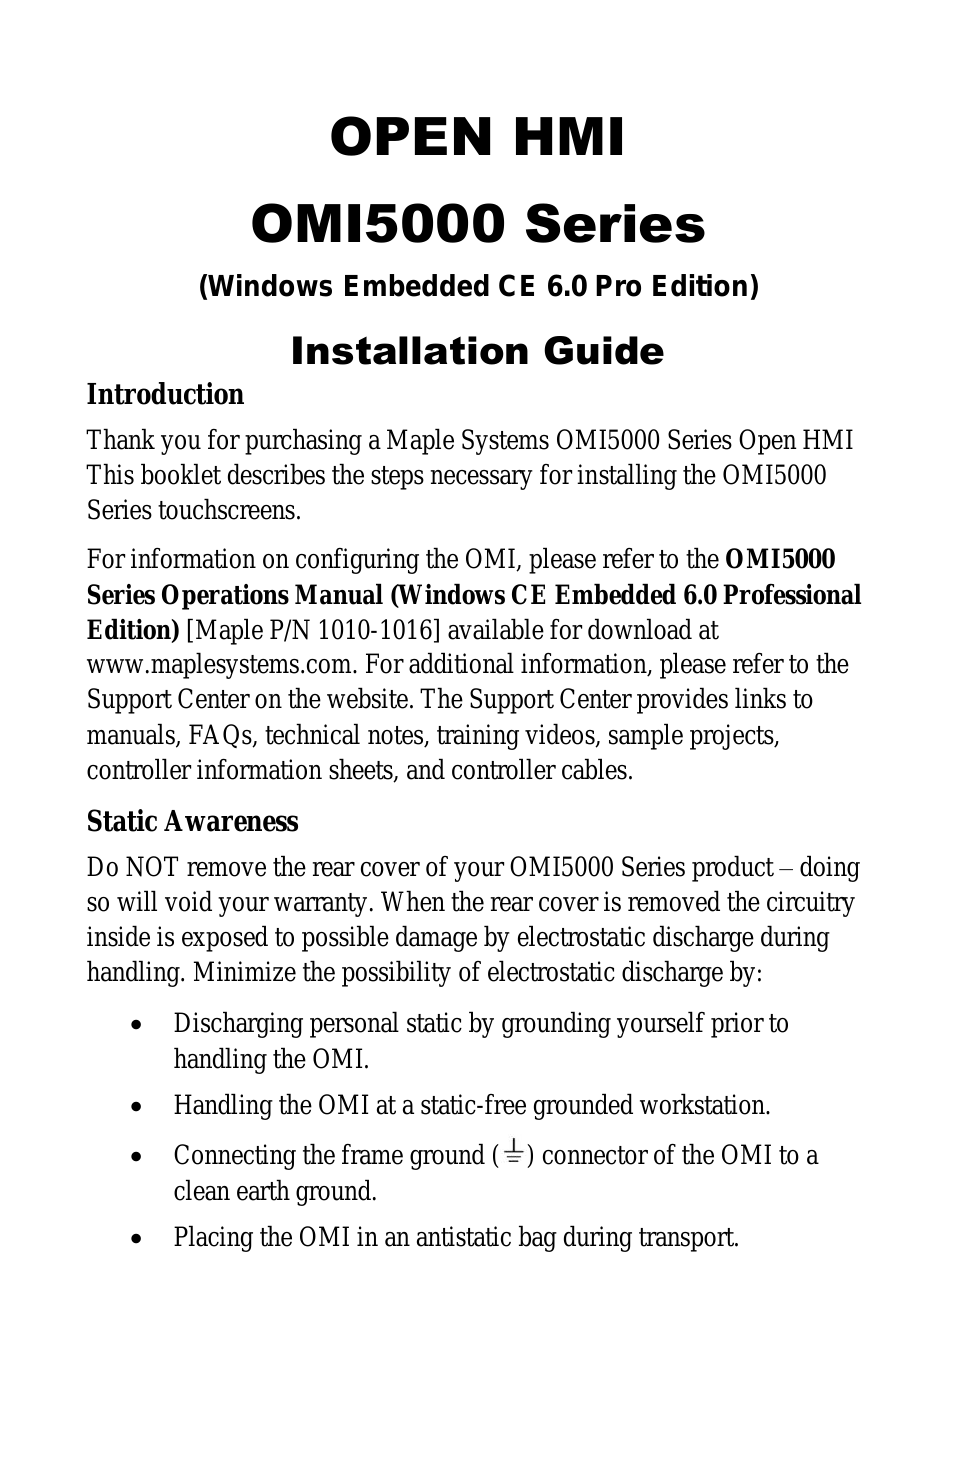 Windows Embedded CE 6.0 Pro Edition